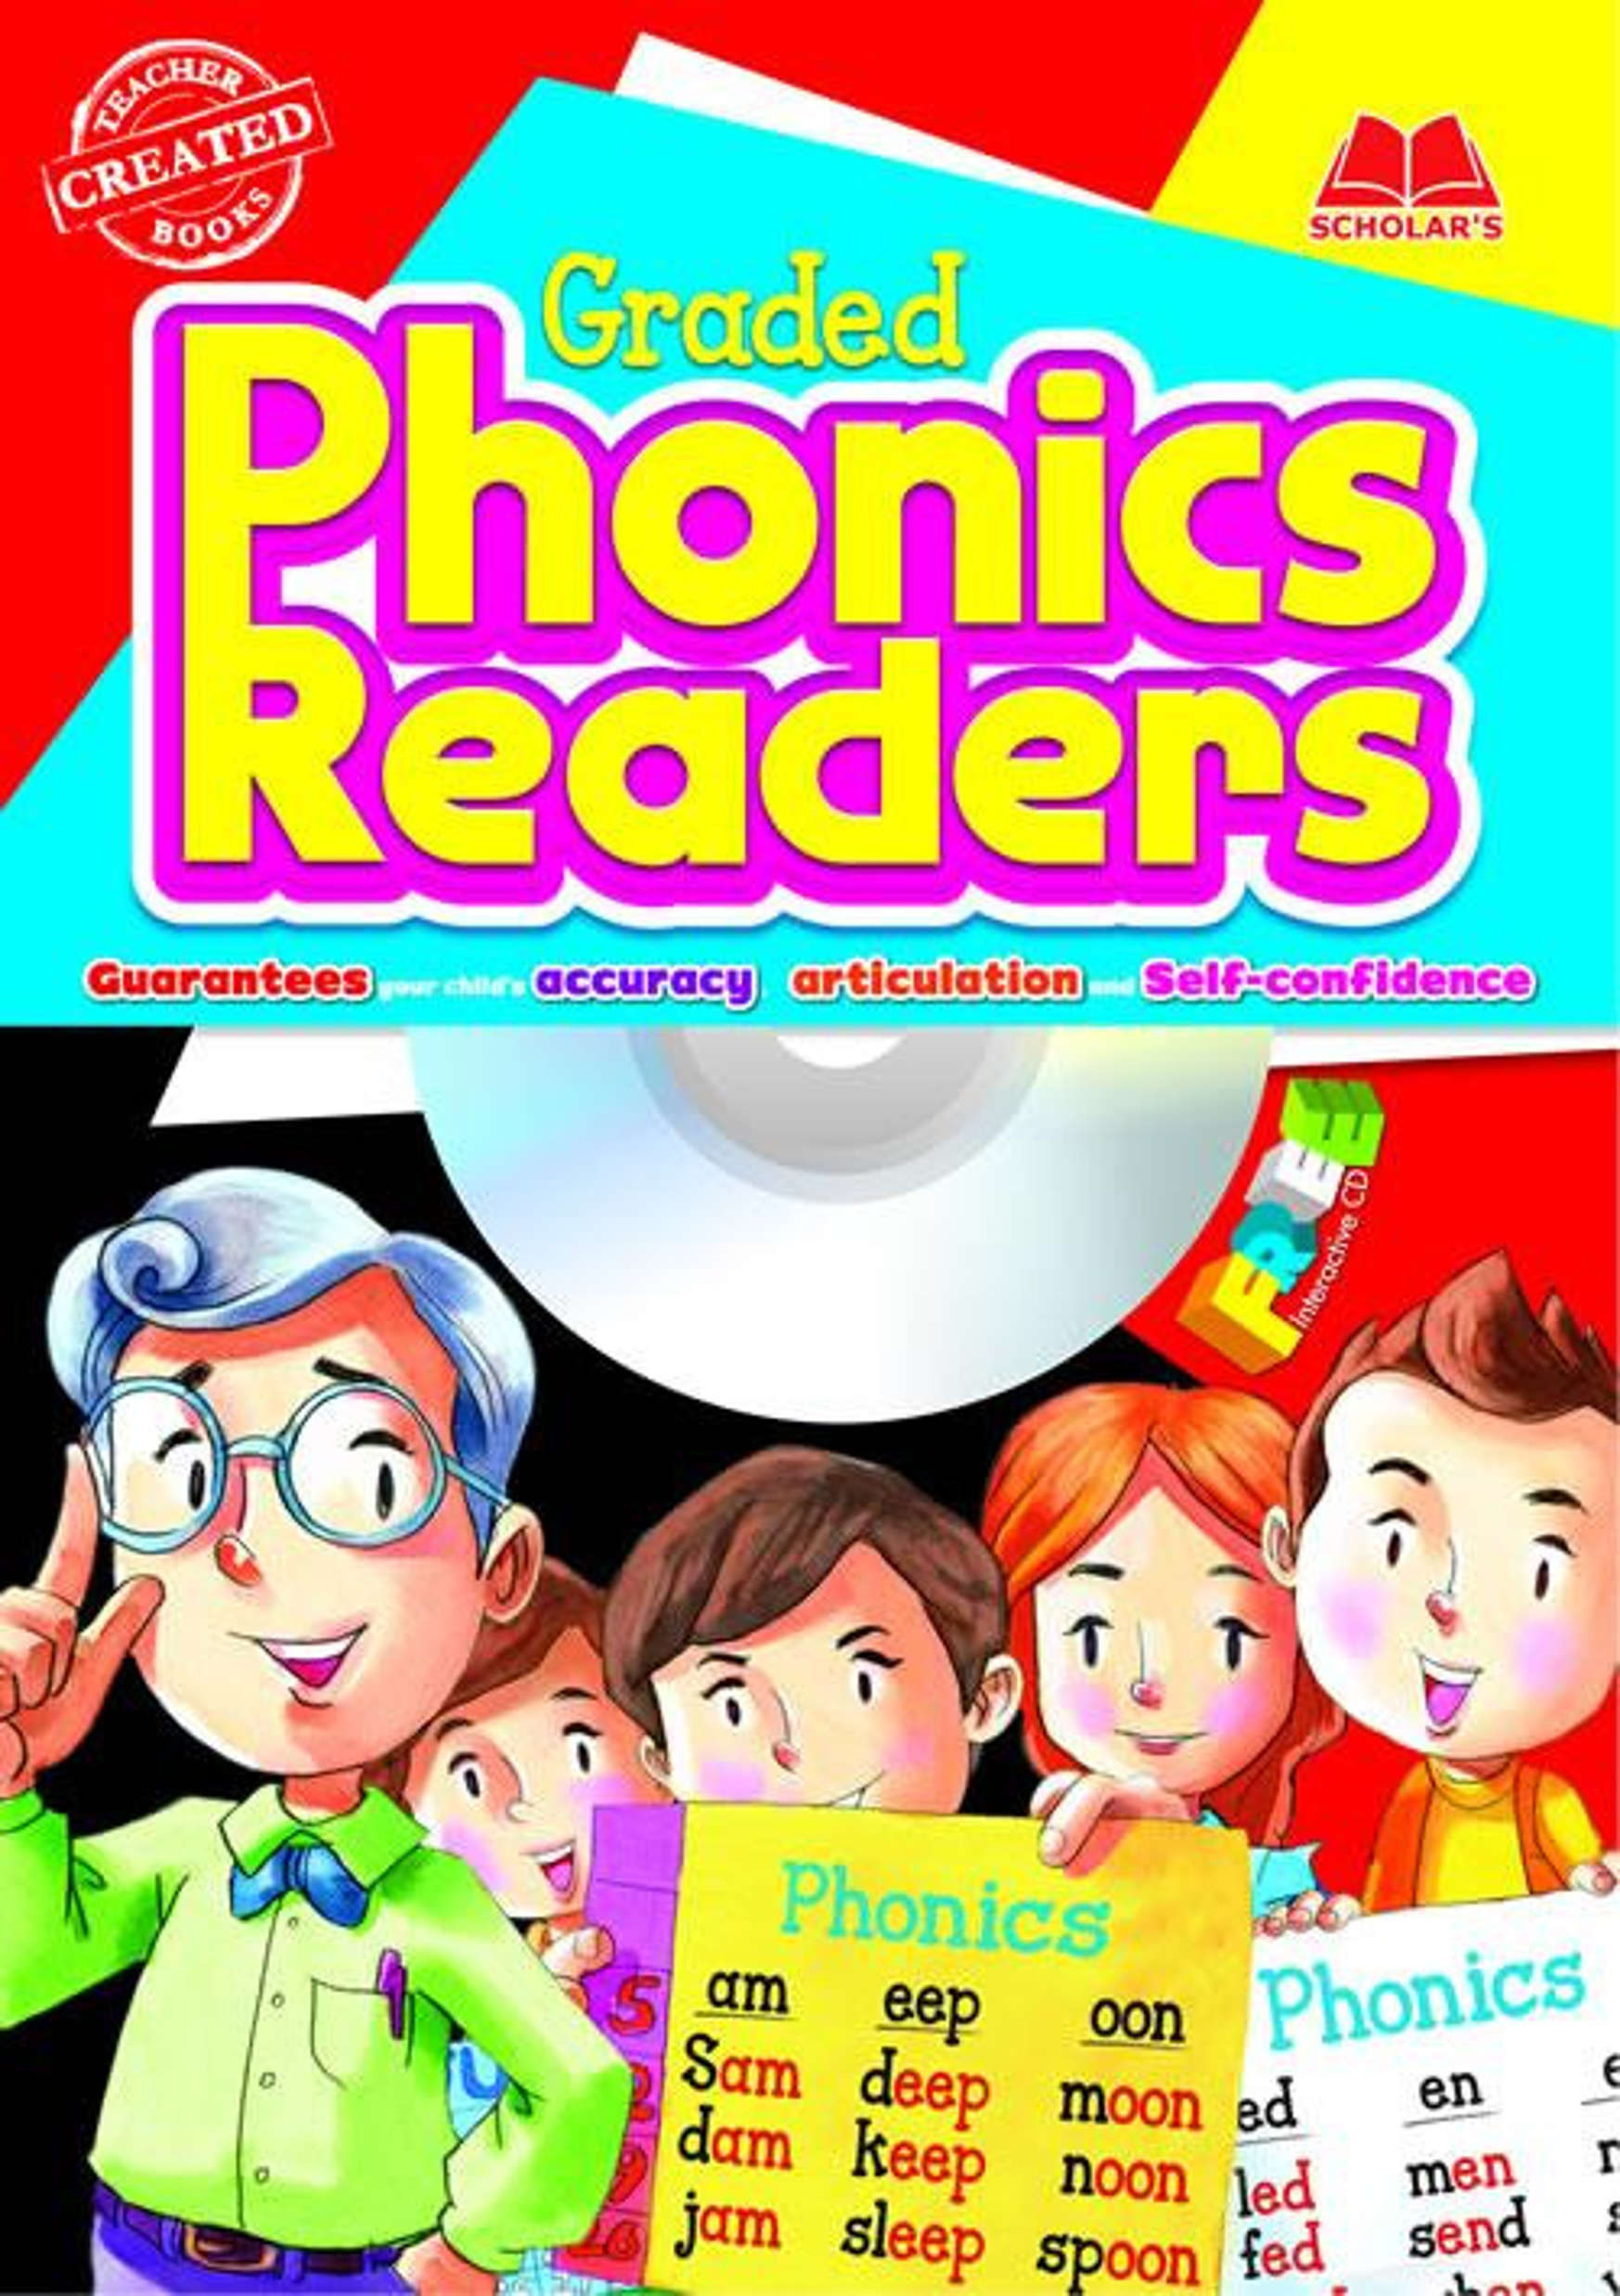 Graded Phonics Readers W/CD